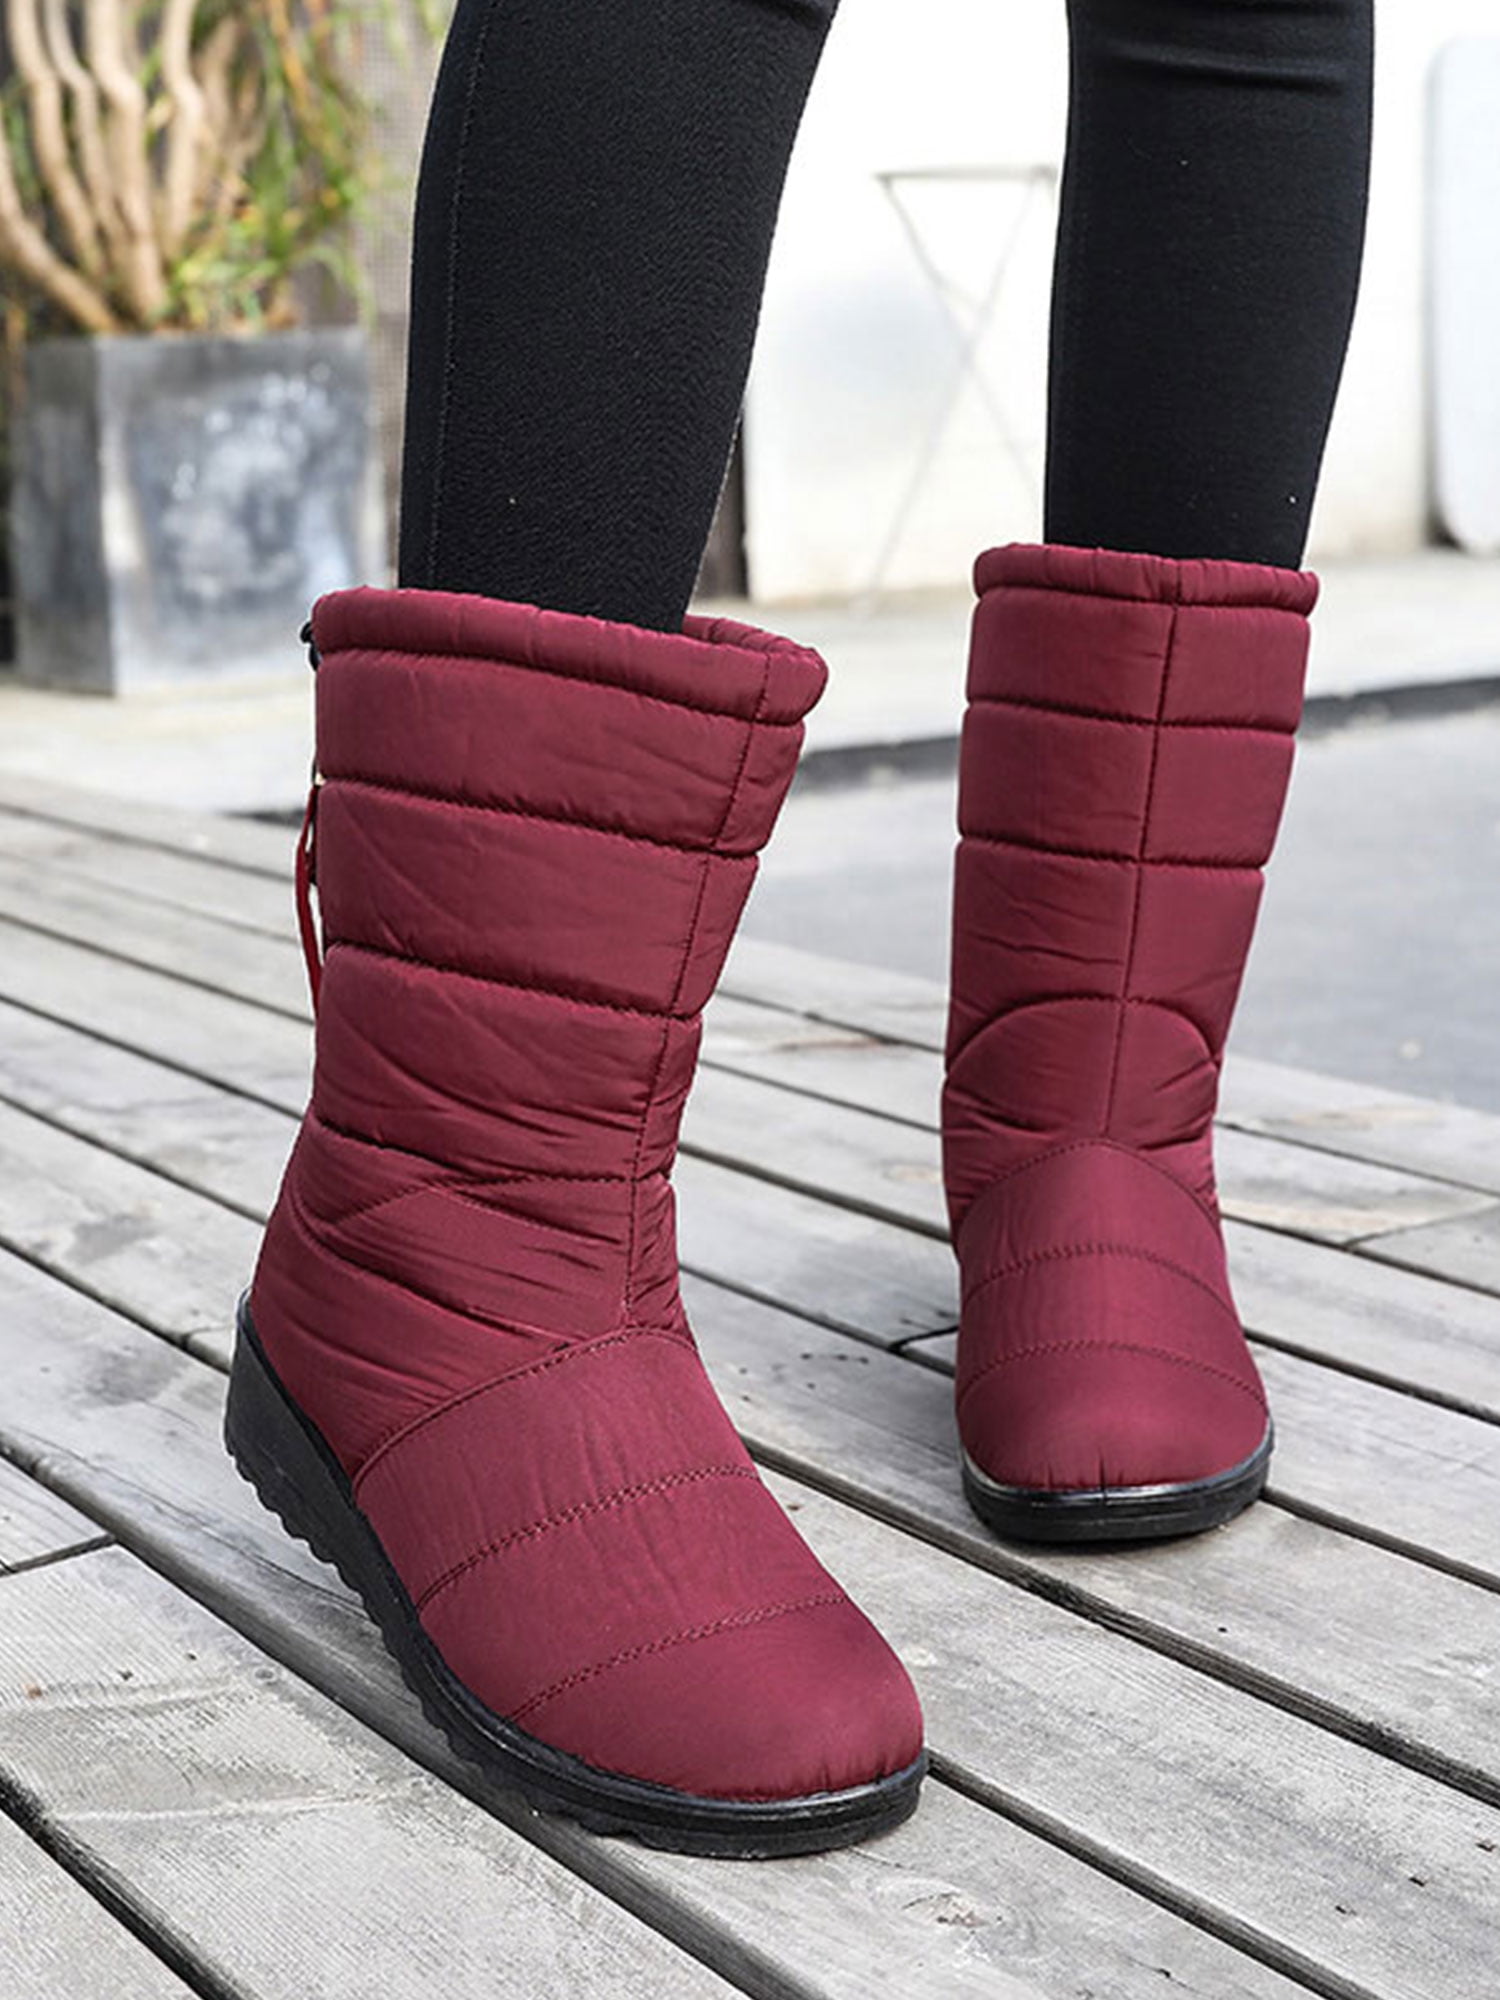 Women Winter Ankle Boots Ladies Flat Fur Boots Comfy Snug Warm Snow Shoes UK 